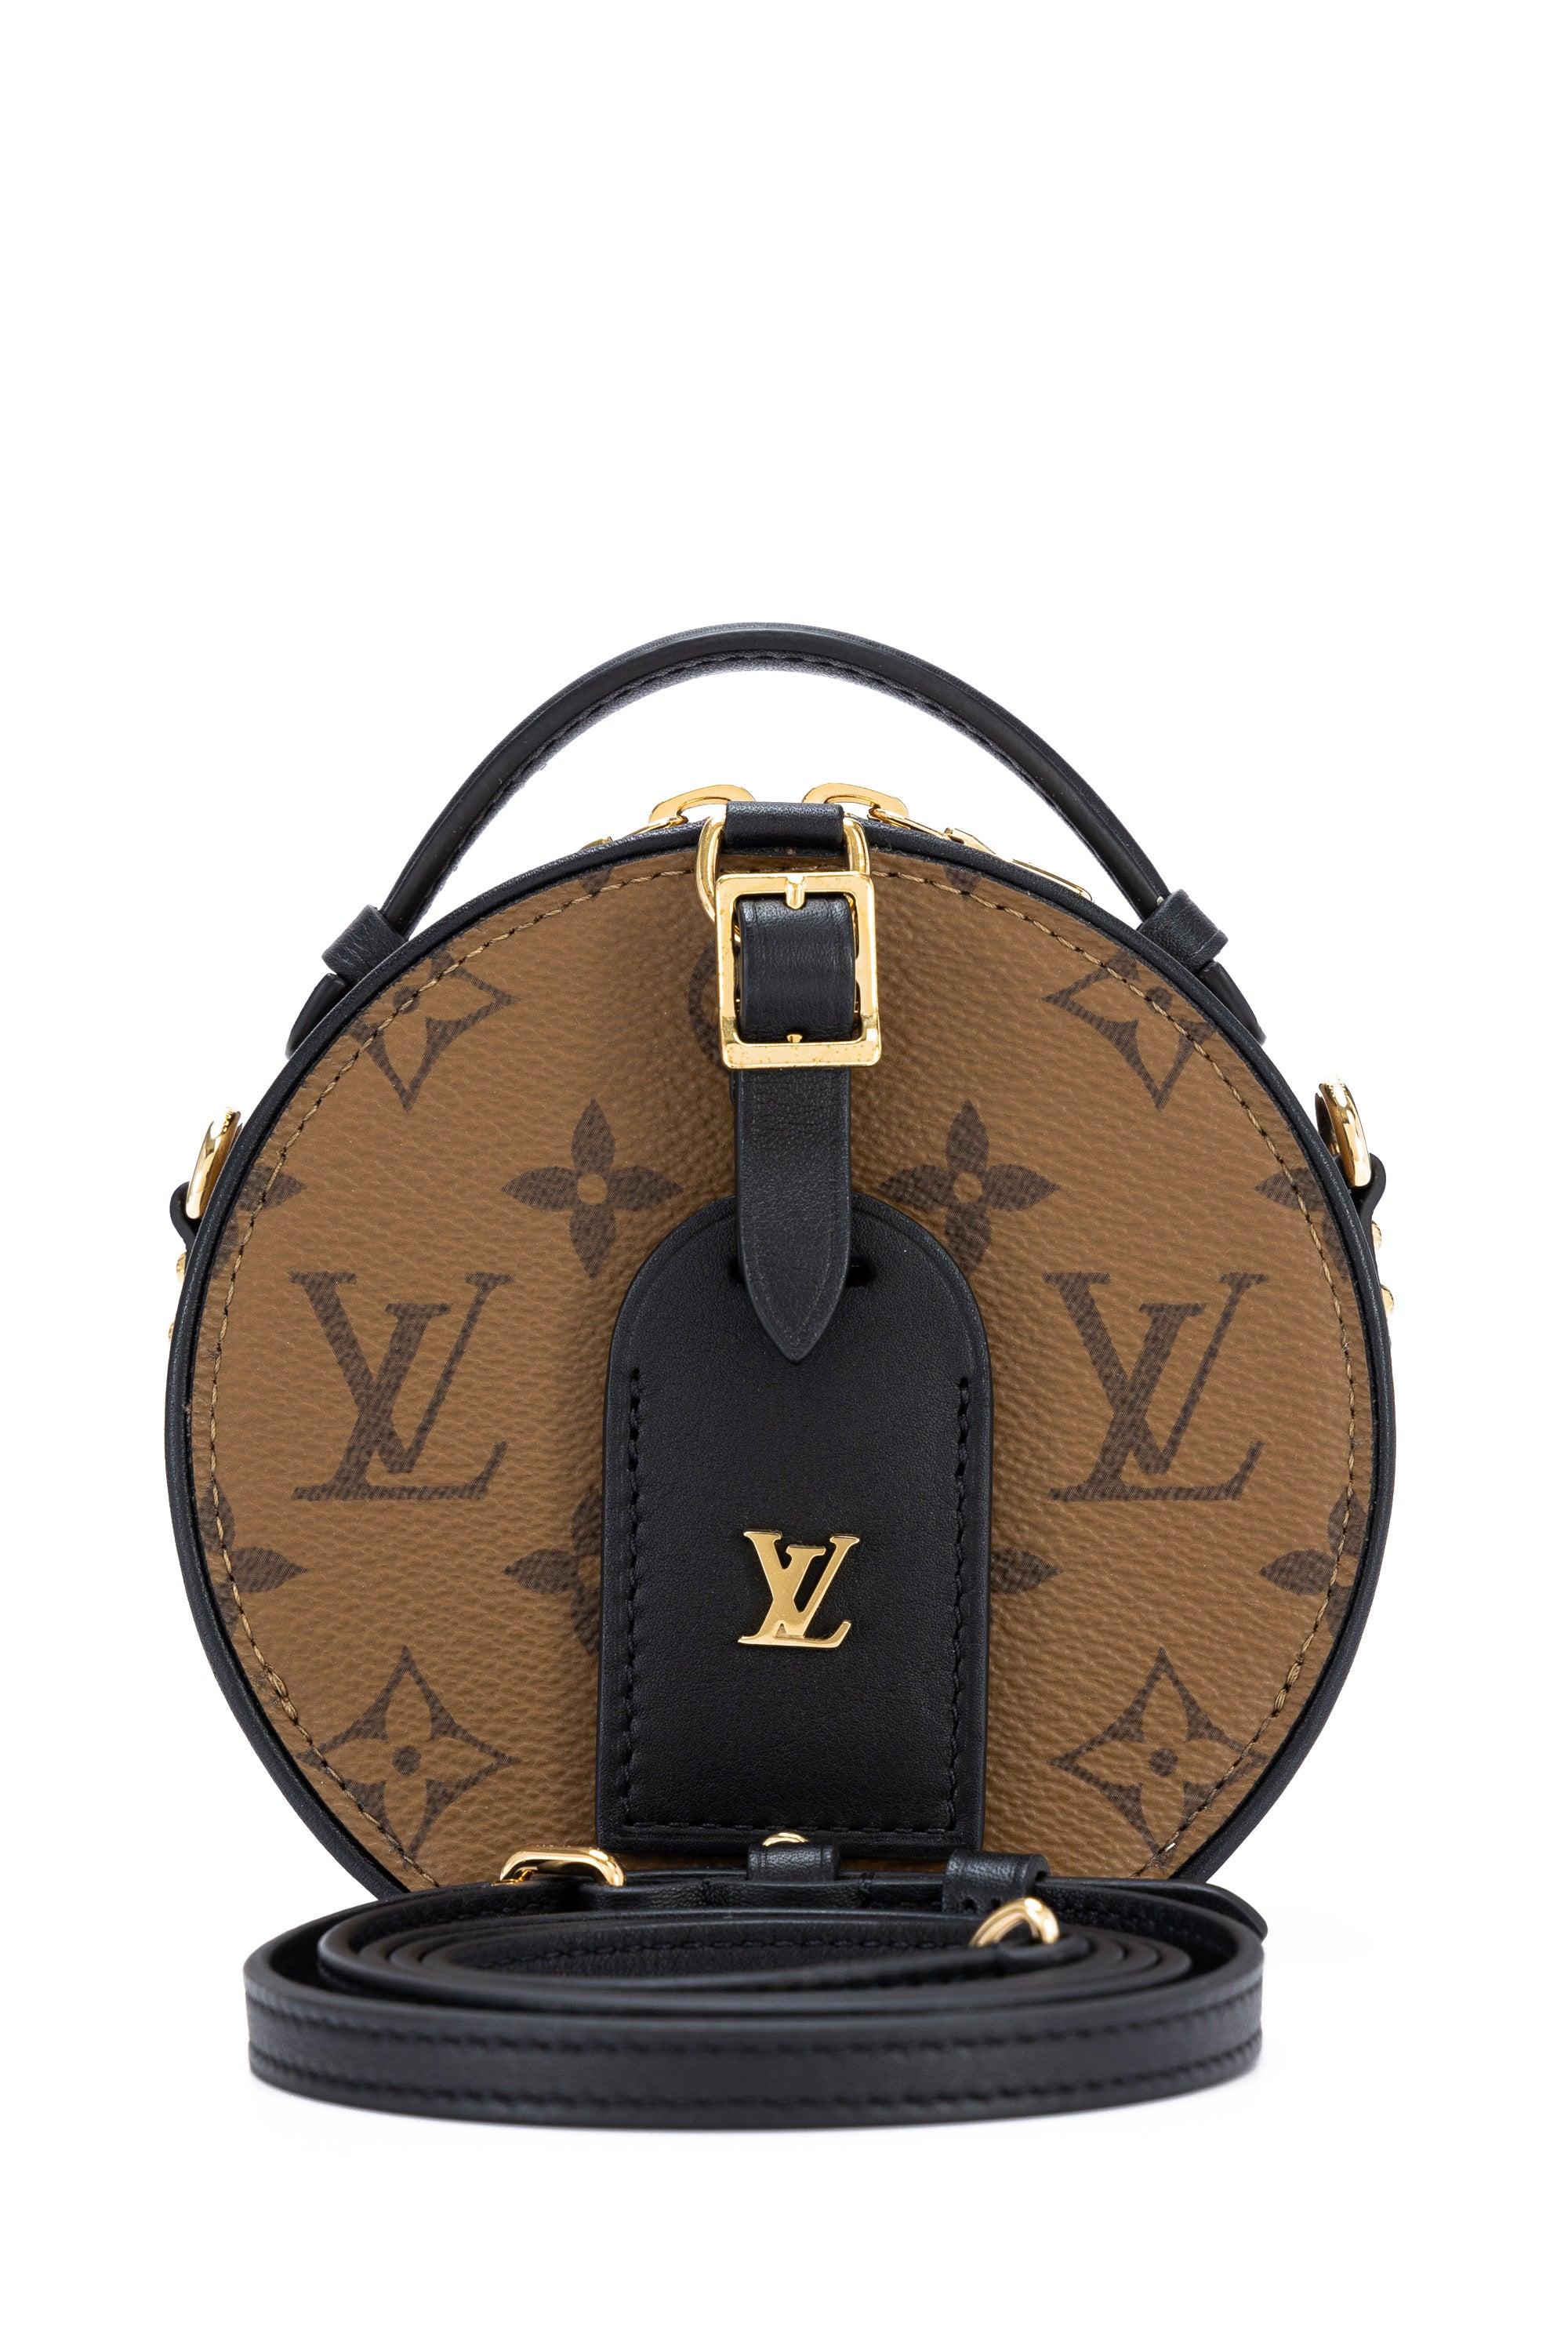 Shop Louis Vuitton MONOGRAM Mini Boite Chapeau (M68276) by